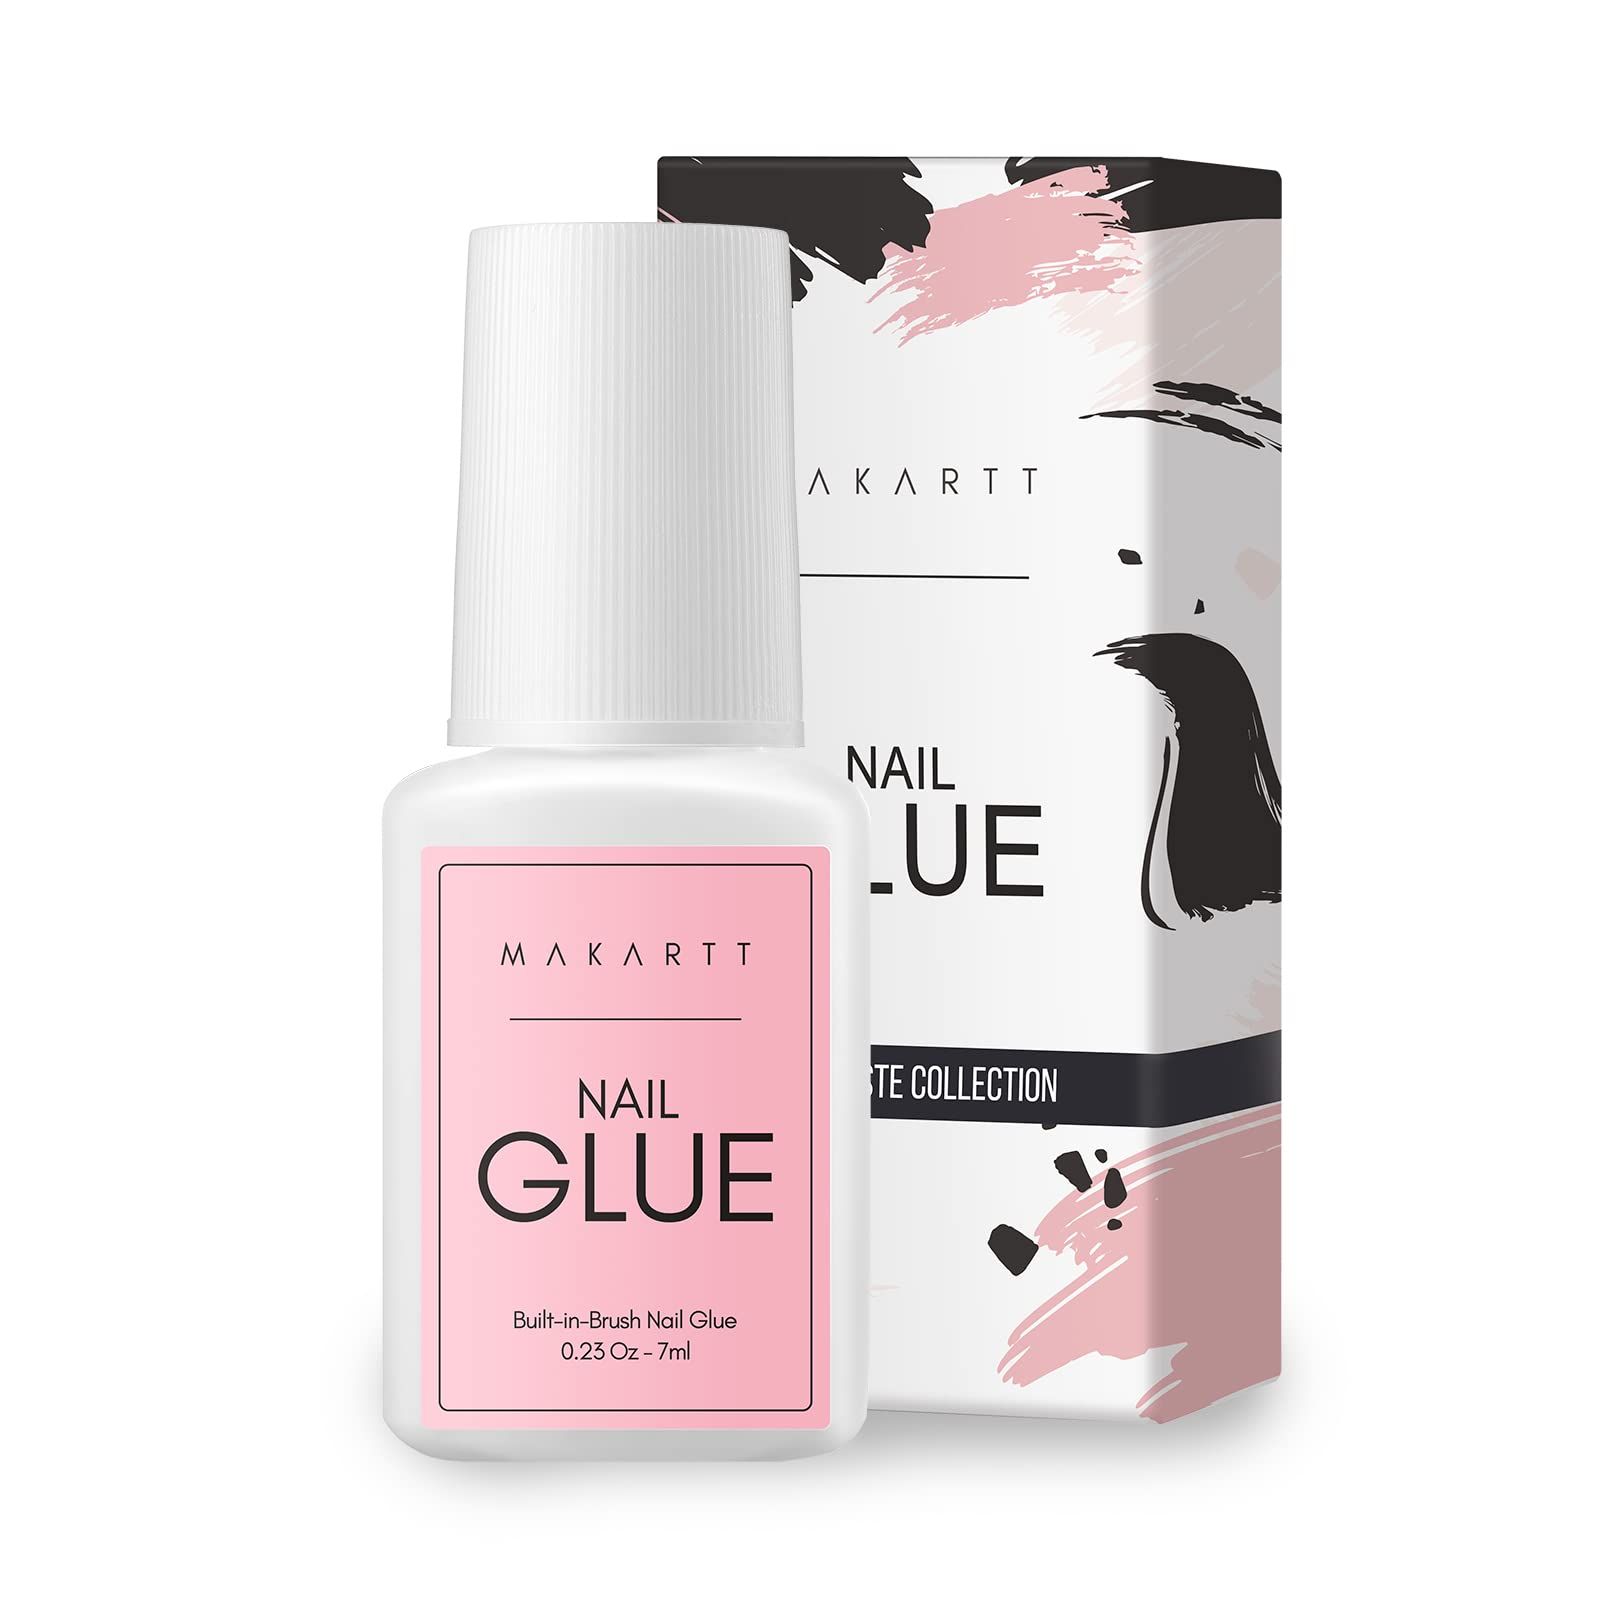 Amazon.com: Kiss Pink Gel Nail Glue : Beauty & Personal Care